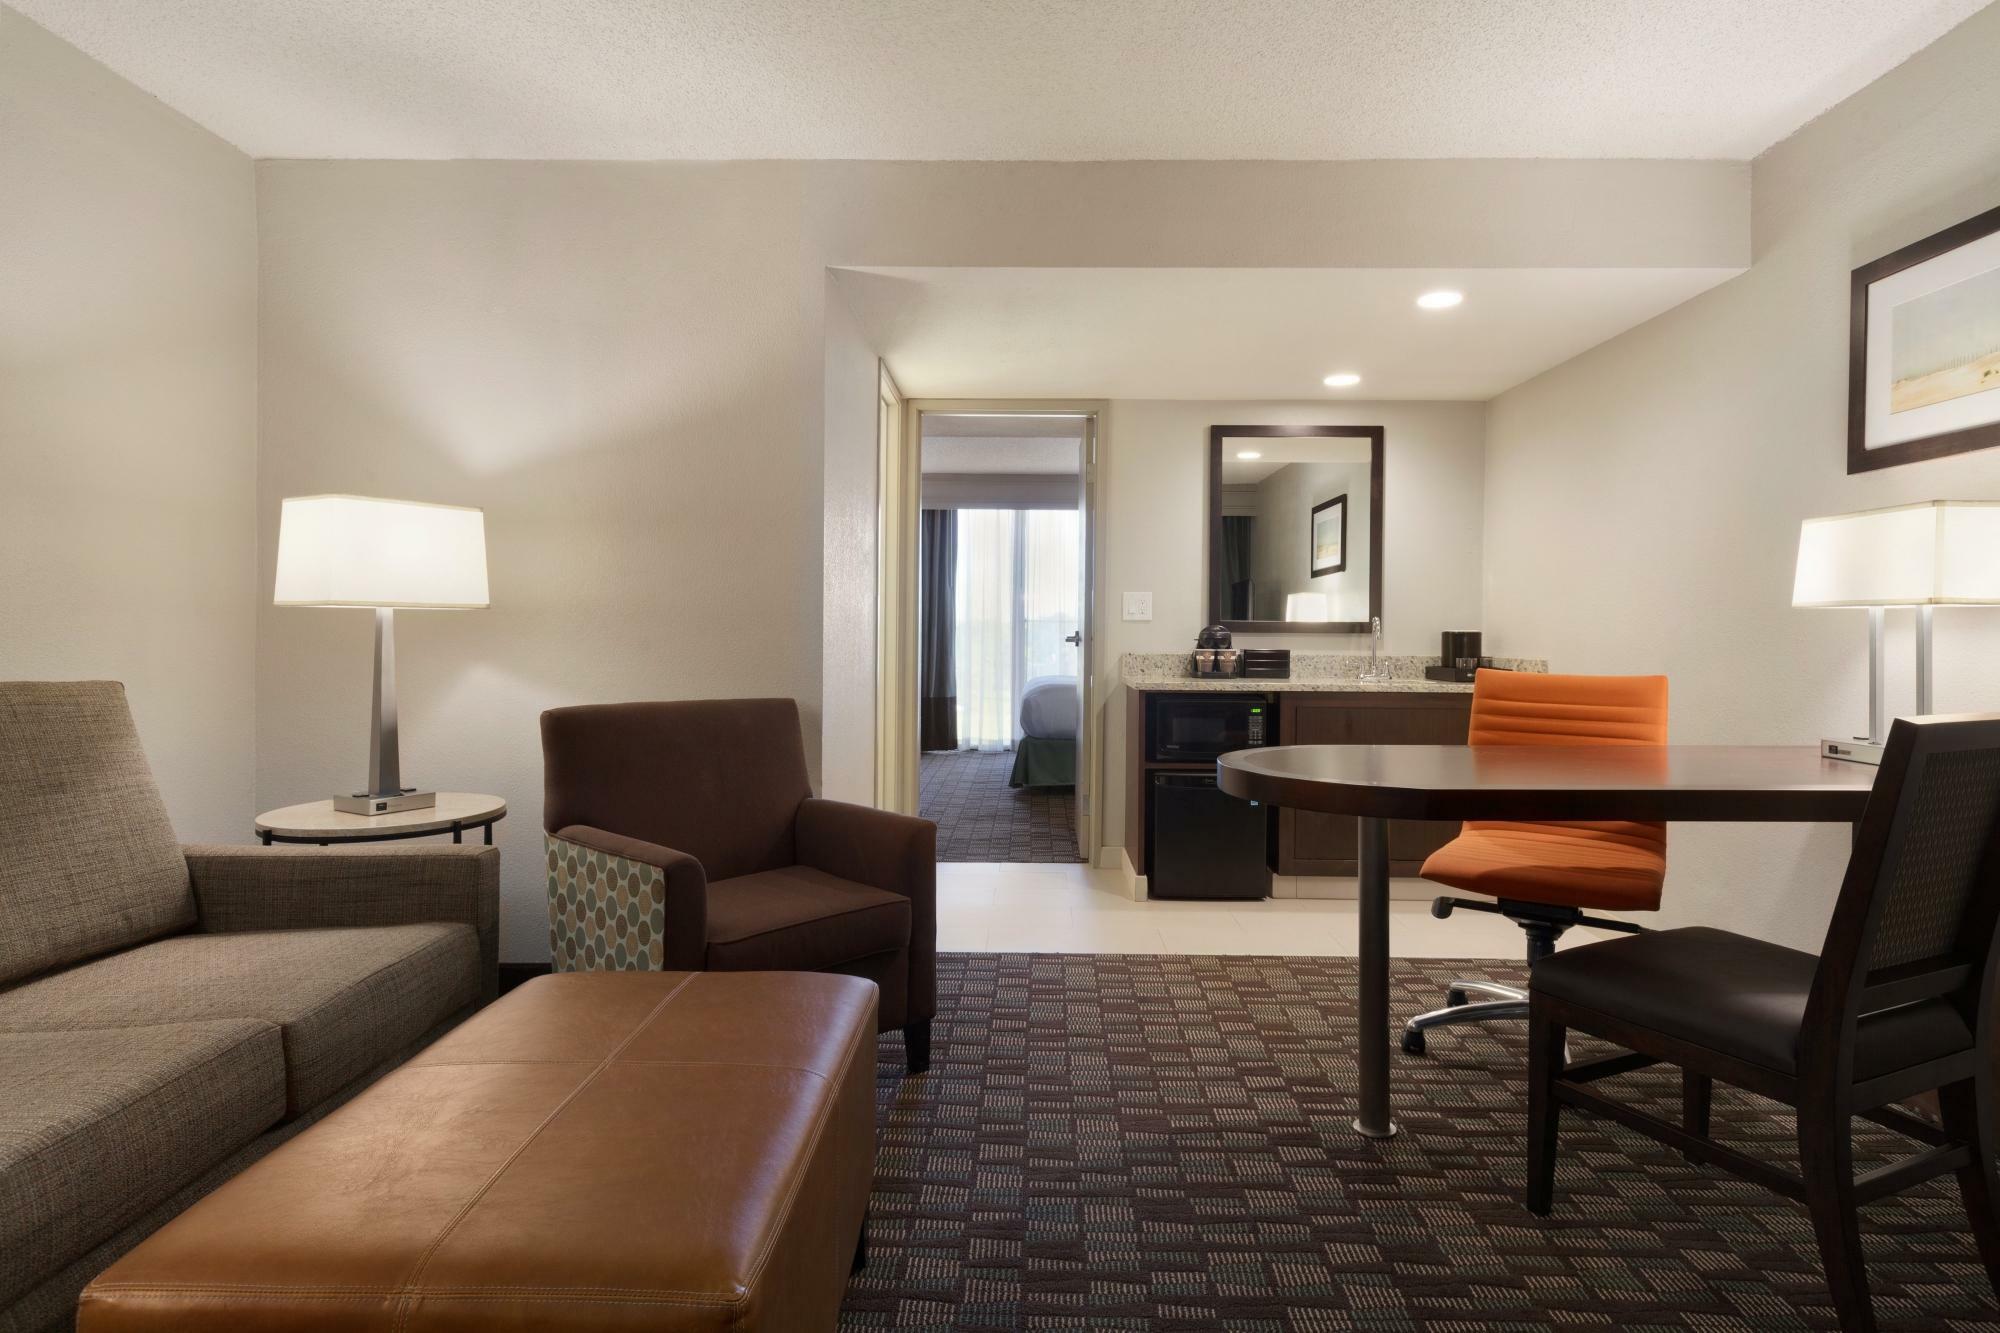 Photo of Embassy Suites by Hilton Jacksonville Baymeadows, Jacksonville, FL